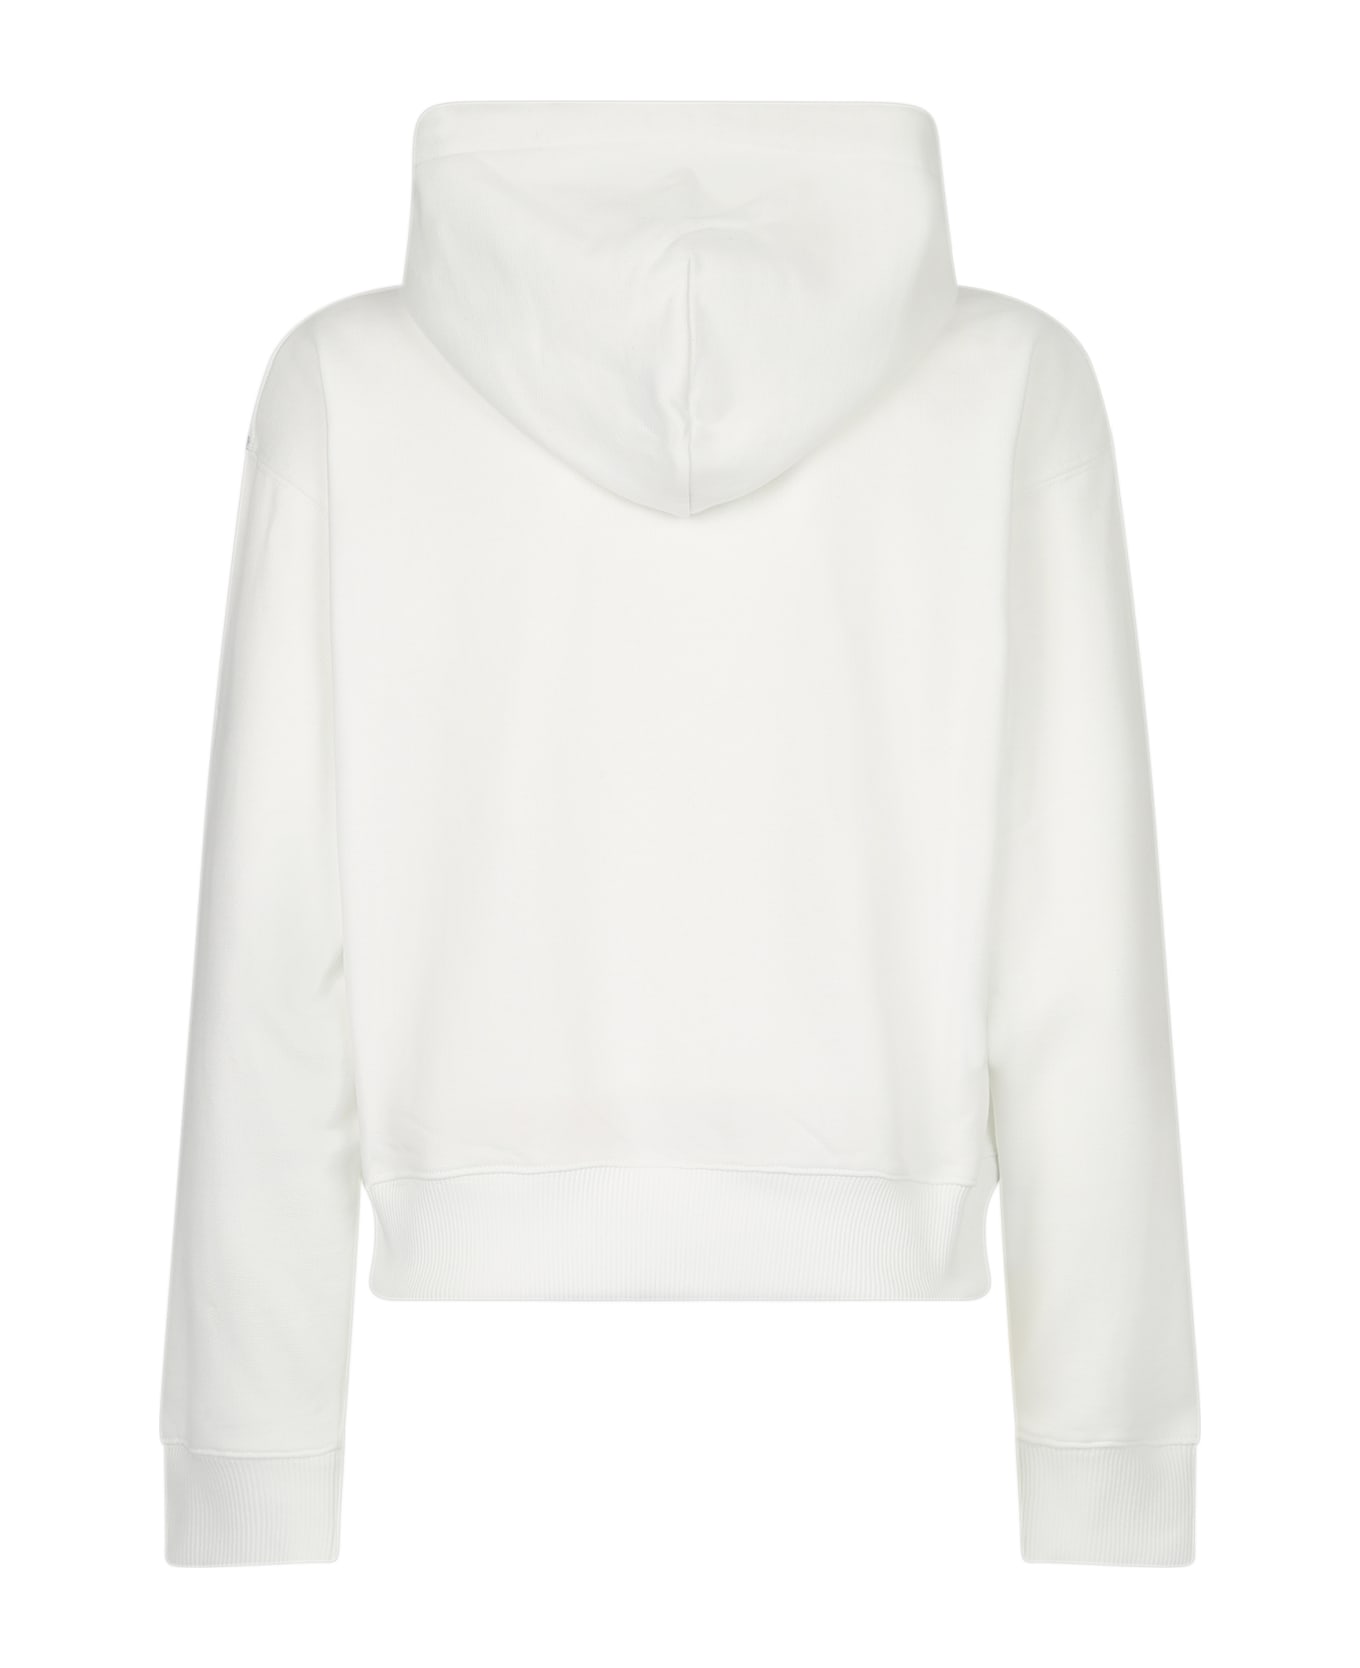 Kenzo Relaxed Fit Sweatshirt - White